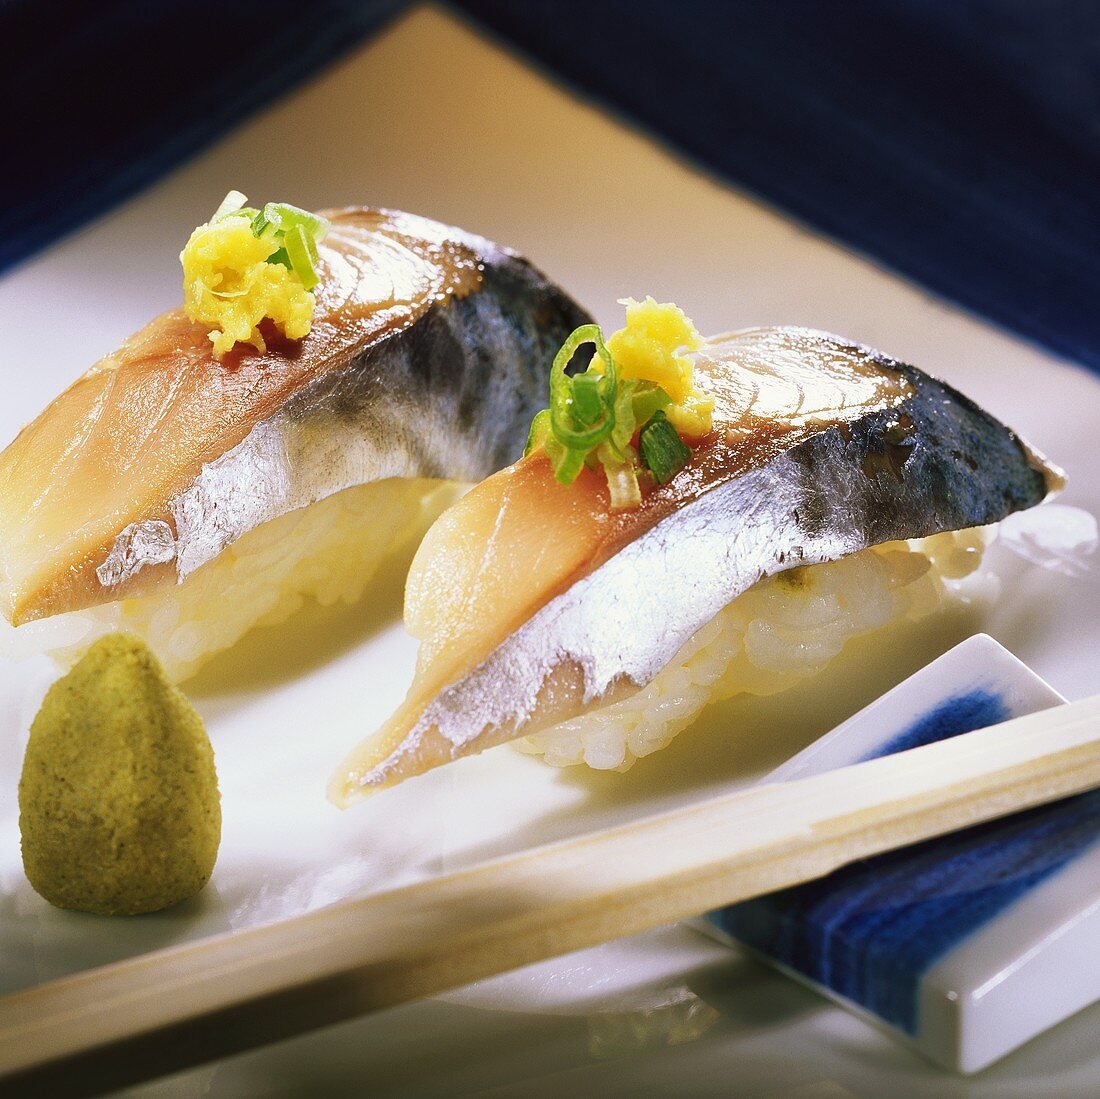 Two nigiri sushi with mackerel